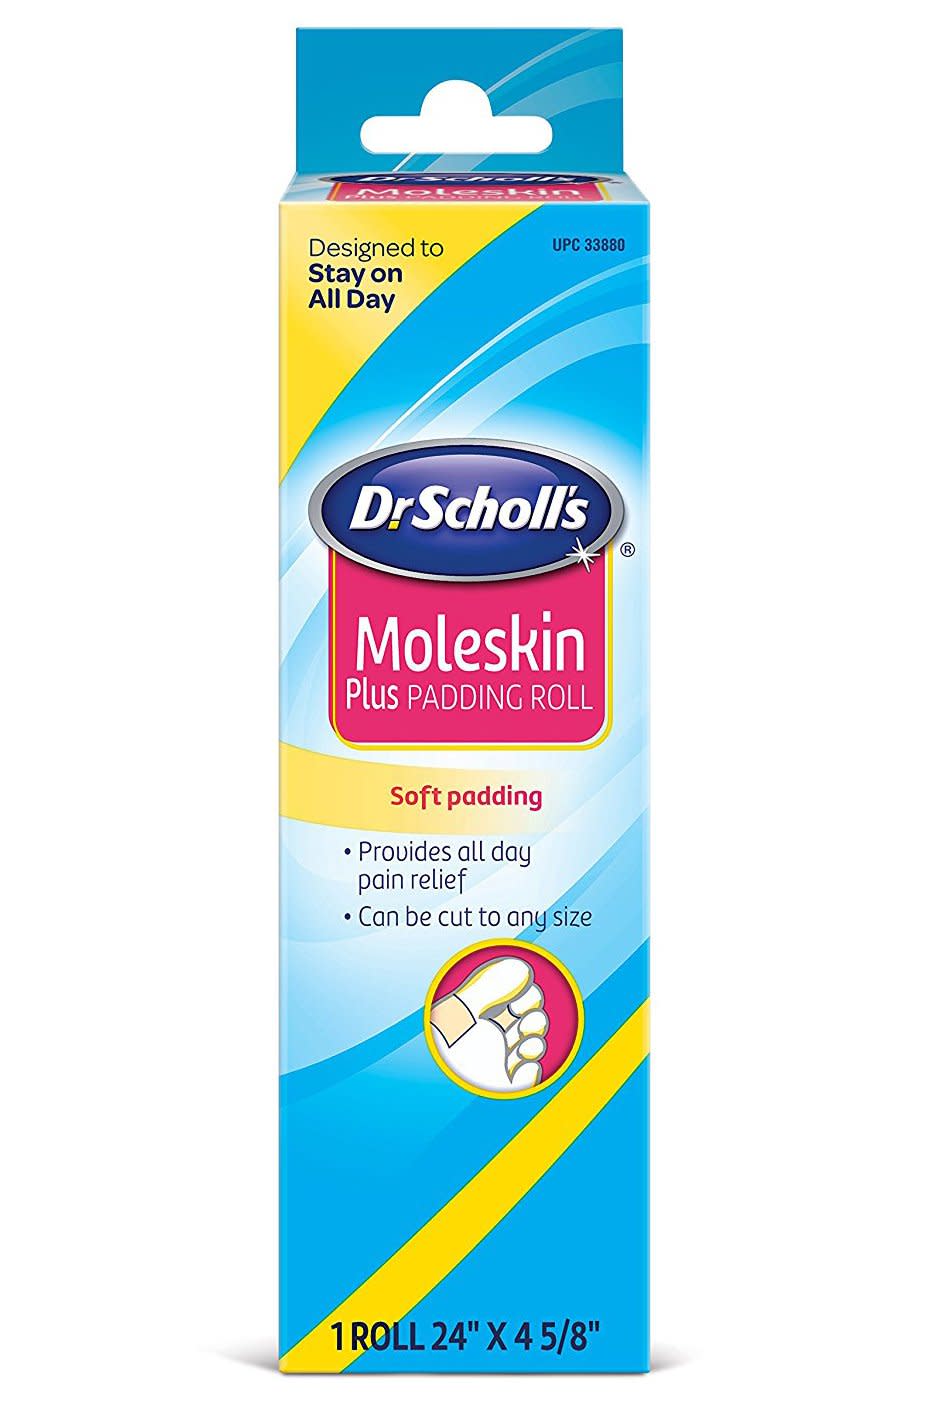 Dr. Scholl's Moleskin Plus Padding Roll